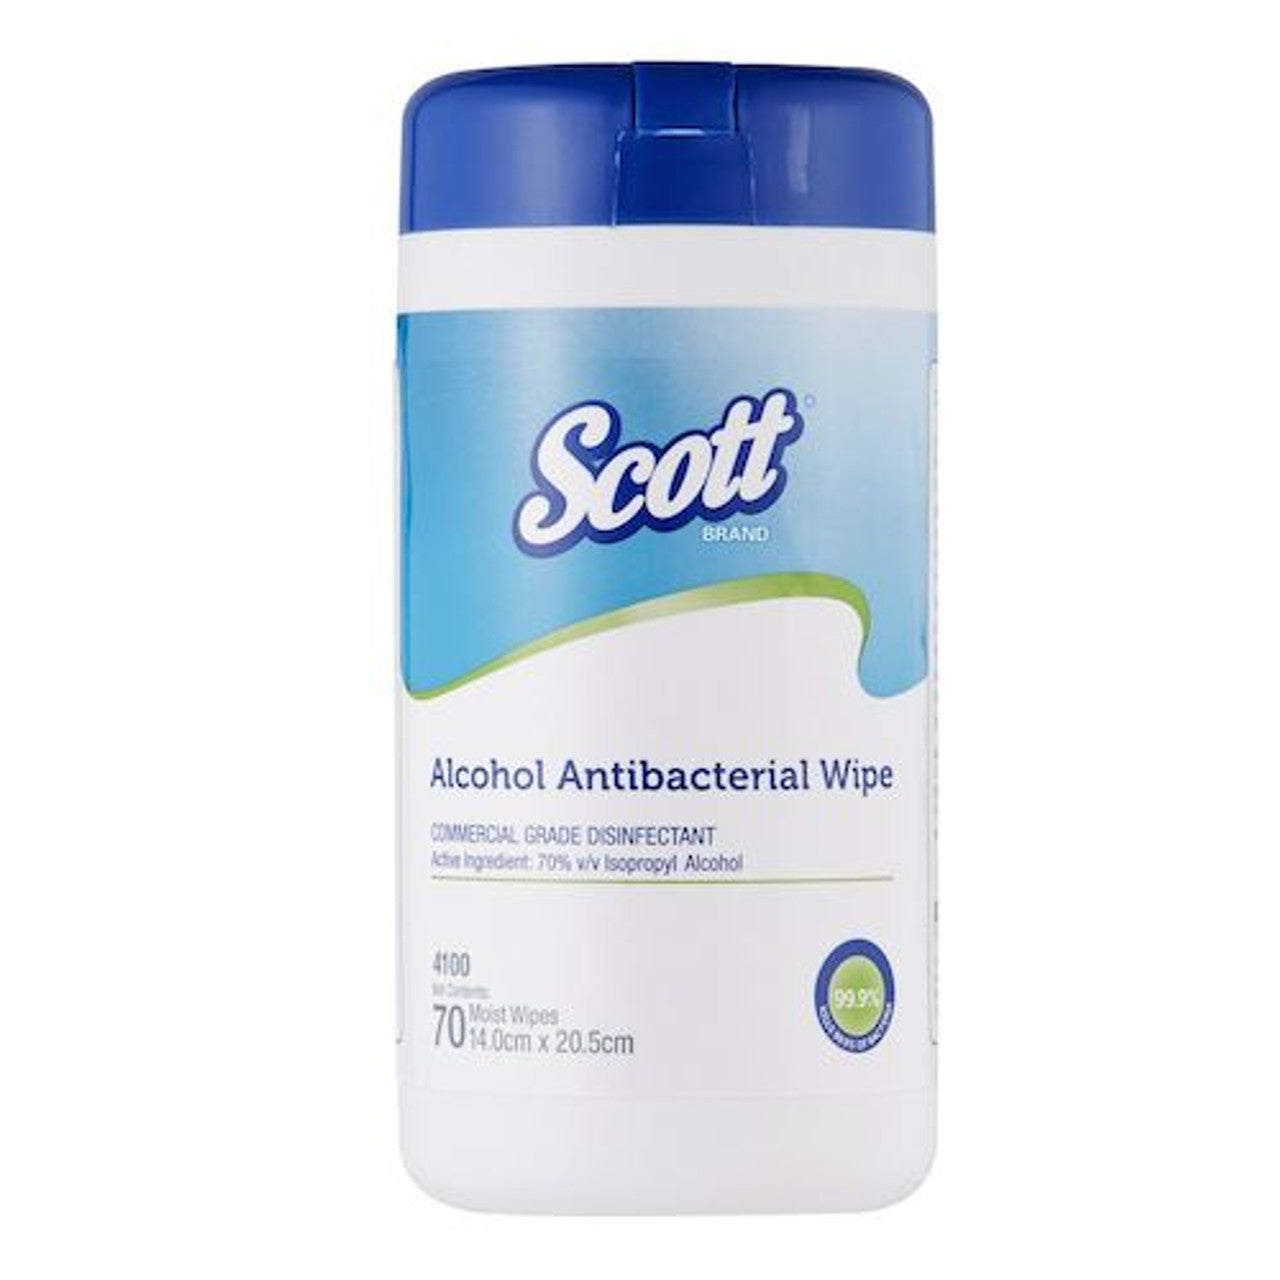 Scott Antibacterial Alcohol Wipes - CT of 12